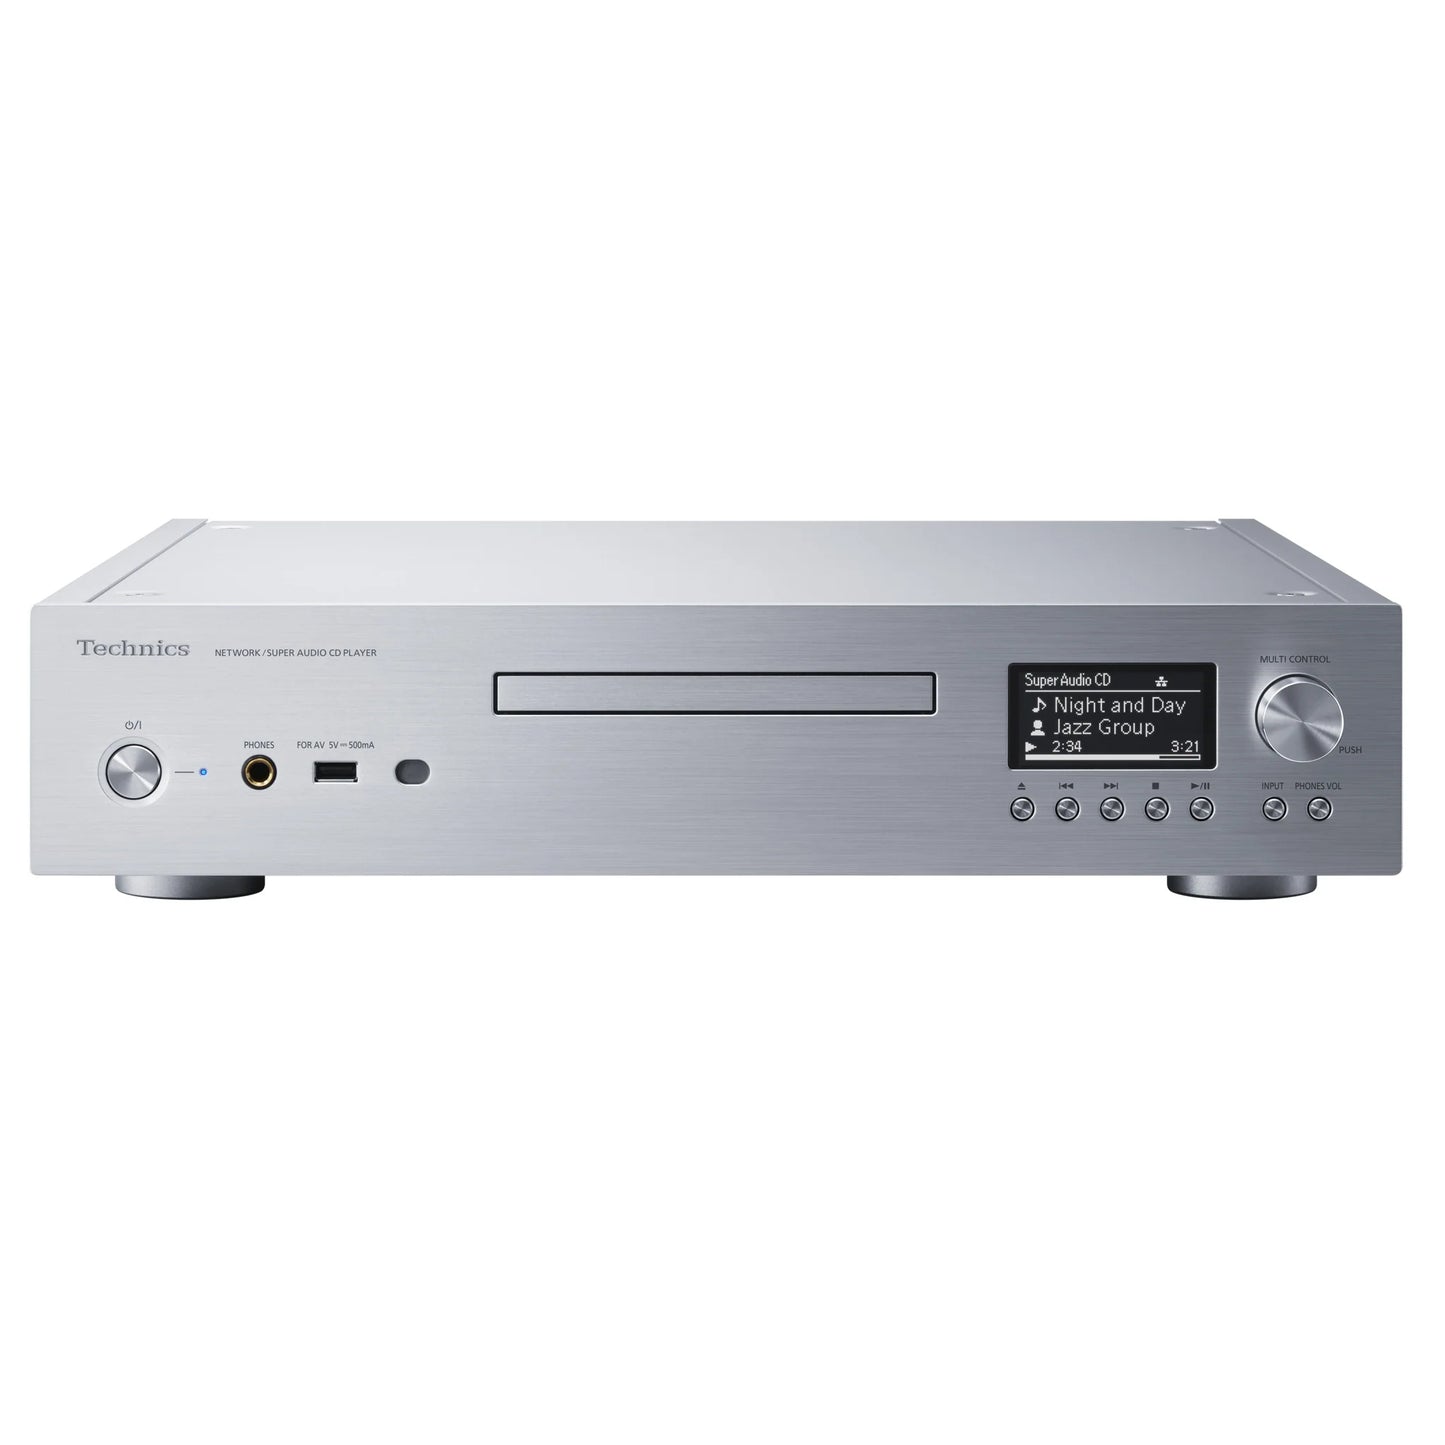 Technics - Network / Super Audio CD Player - SL-G700M2